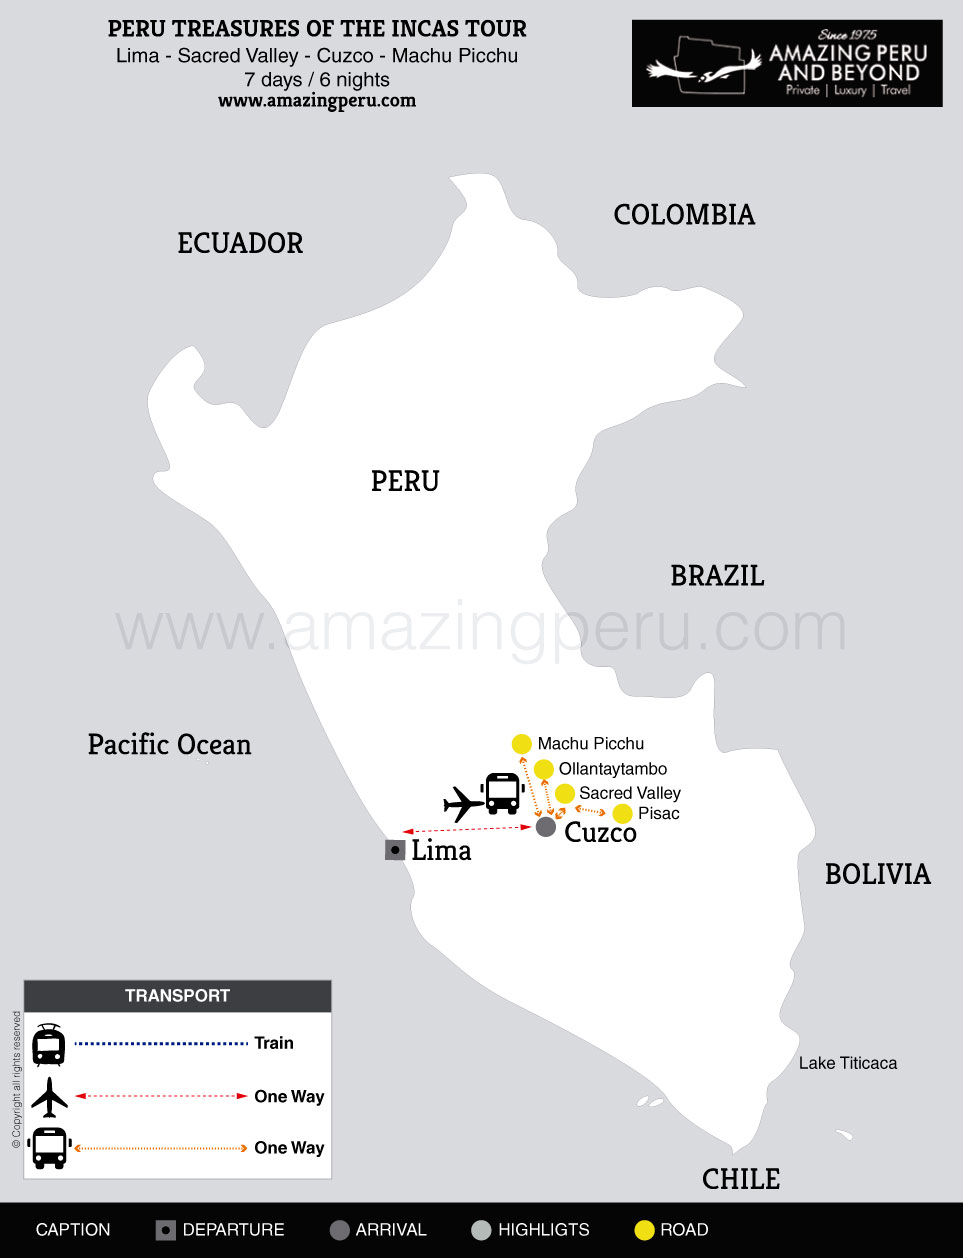 2023 Peru Treasures of the Incas Tour - 7 days / 6 nights.